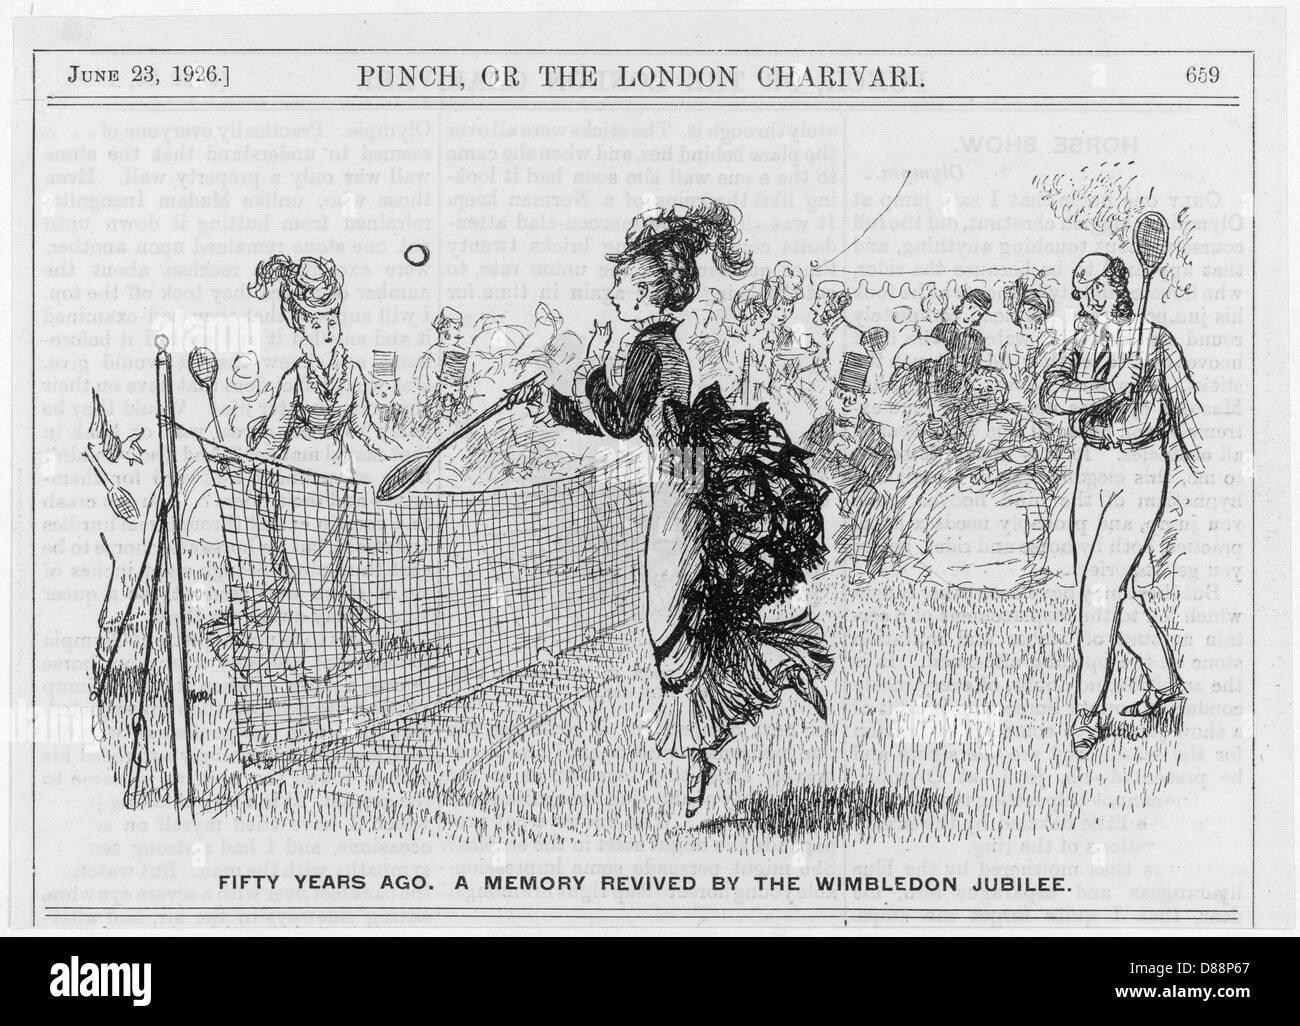 Tennis in erba - Punch - 1883 Foto Stock